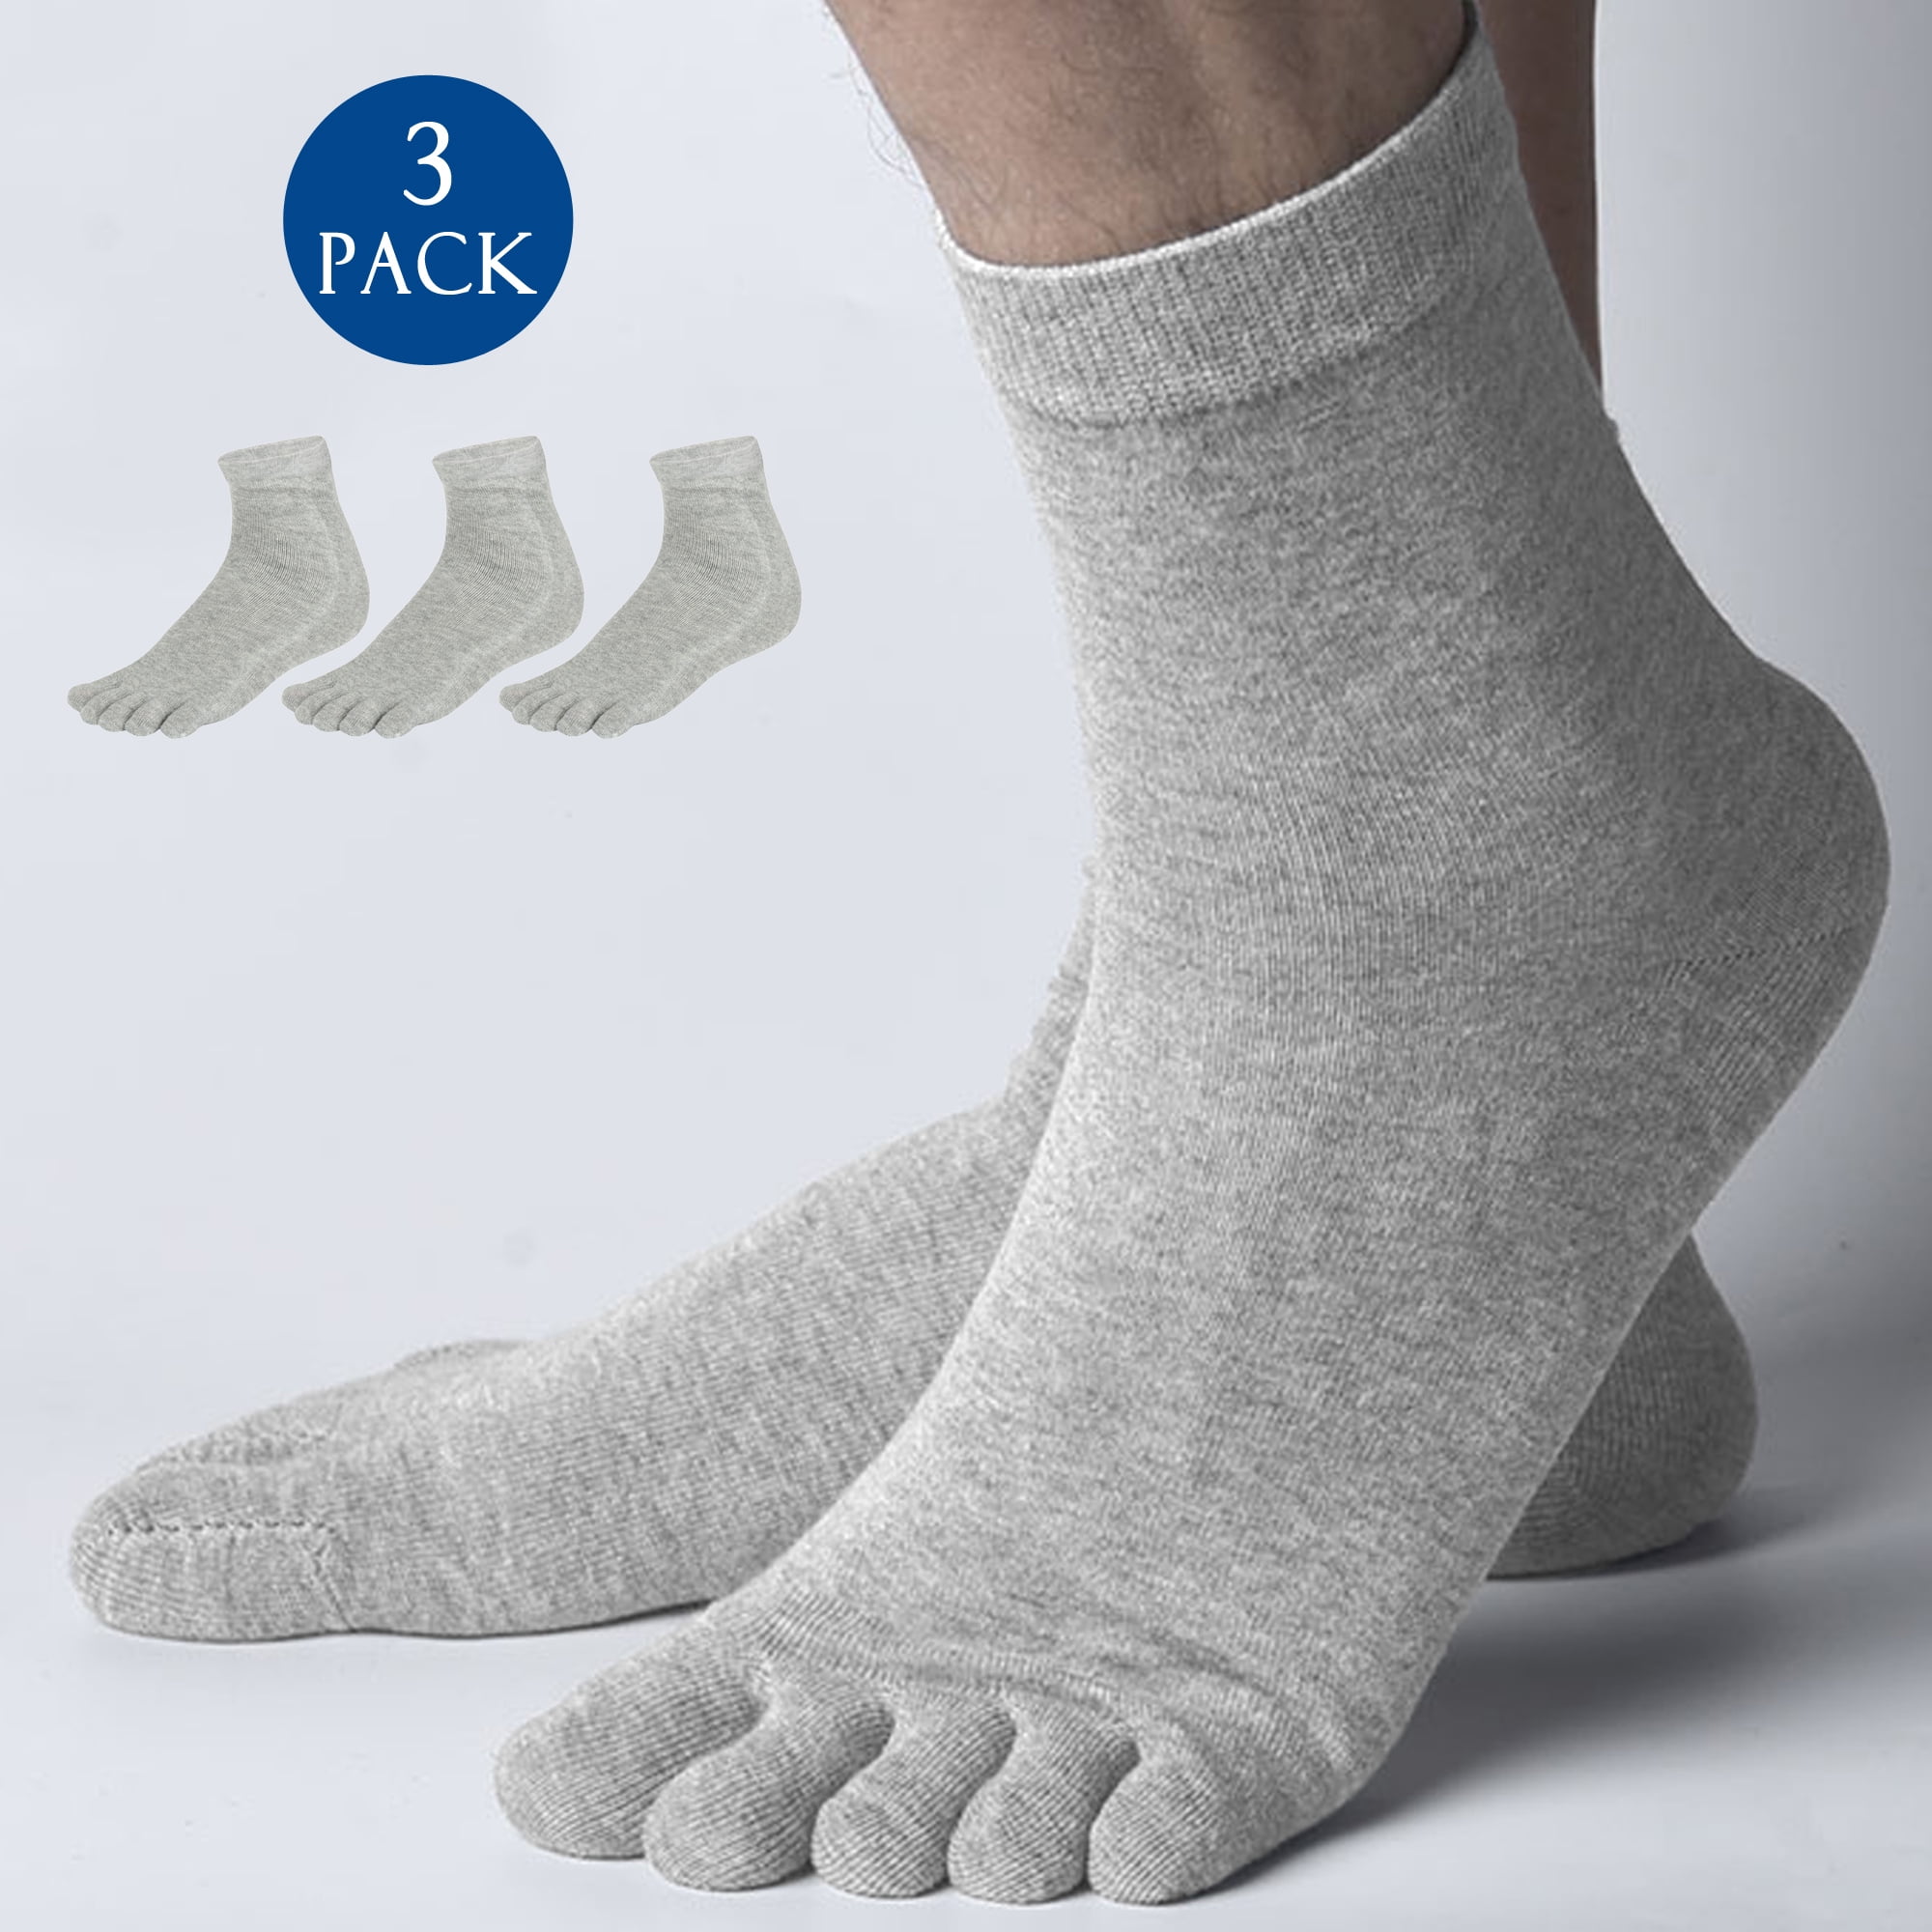 Toe Socks Five Fingers Socks Breathable Cotton Sports Solid Color Happy Socks A+